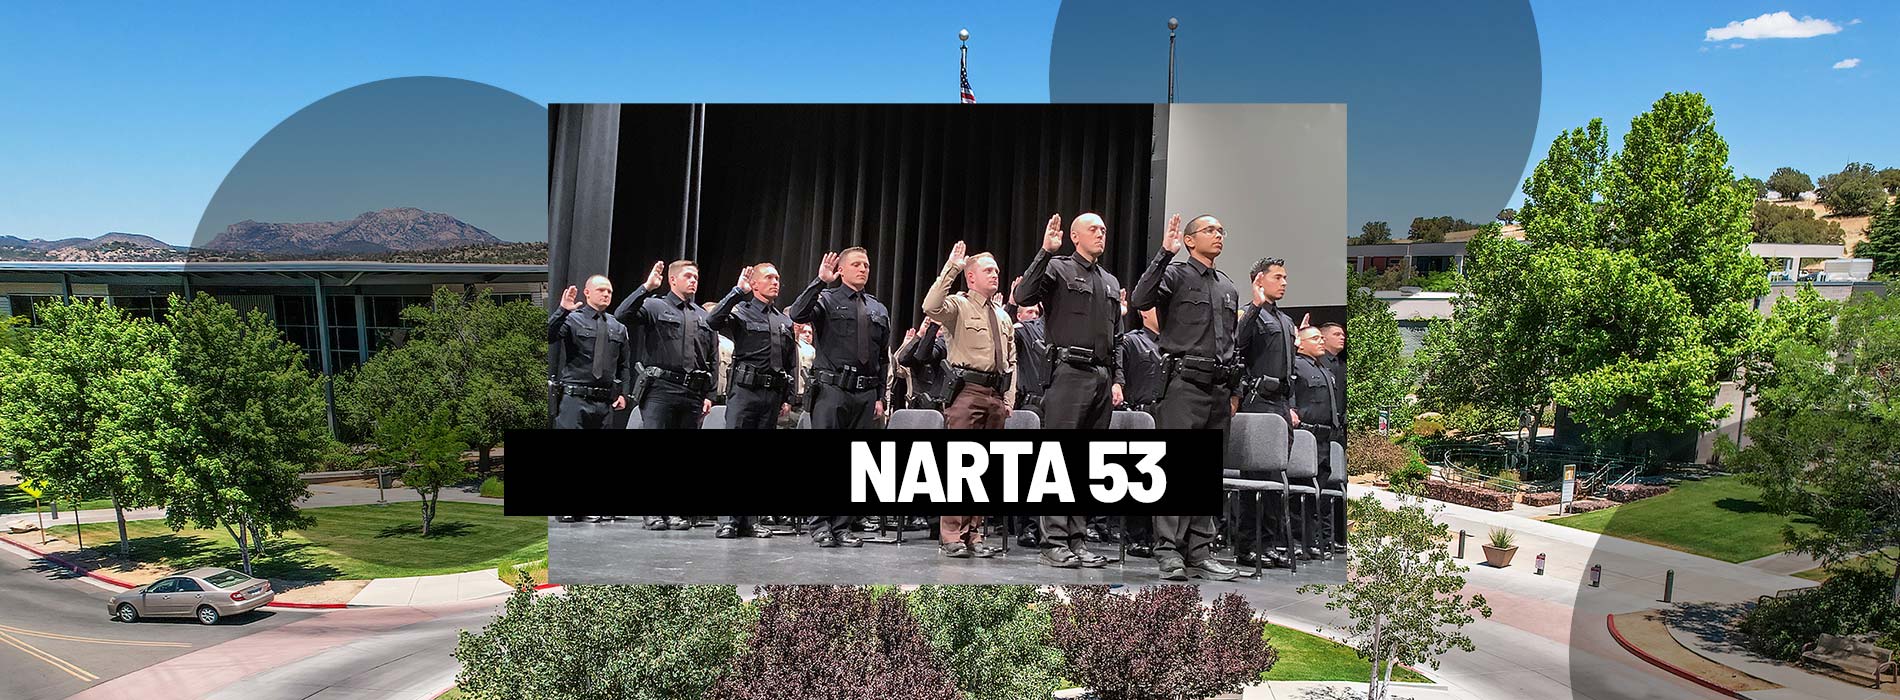 NARTA 53